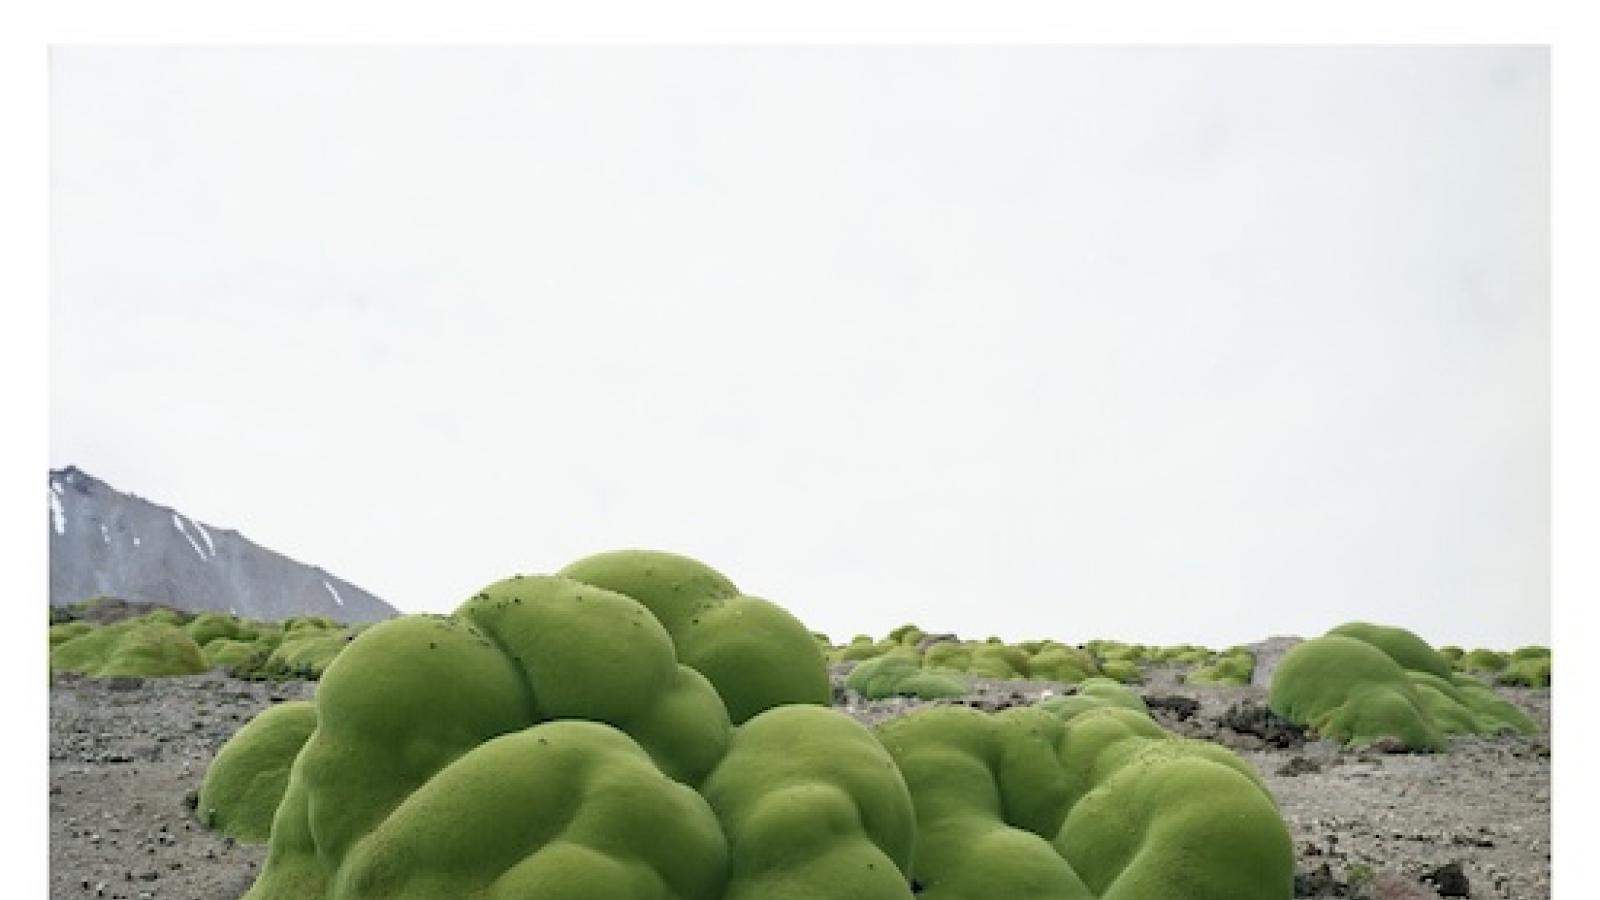 Rachel Sussman's photograph of a group of blob-like green bushes of the llareta plant in Chile's Atacama Desert